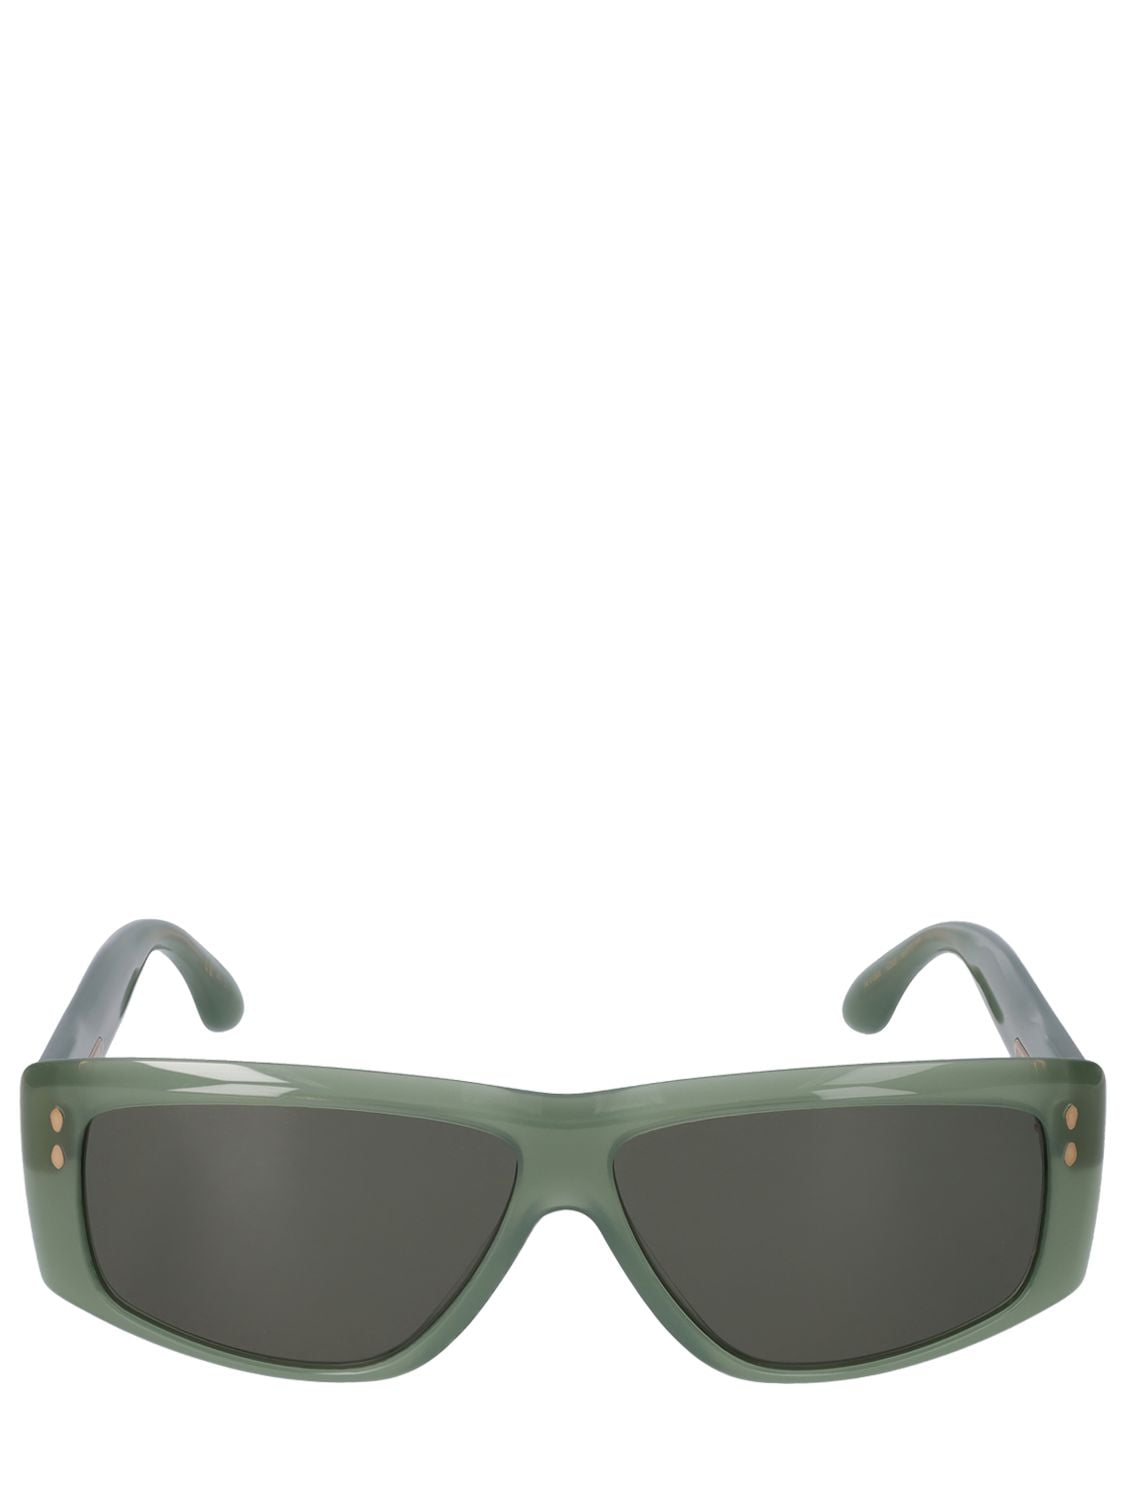 Image of The New Bombé Squared Acetate Sunglasses